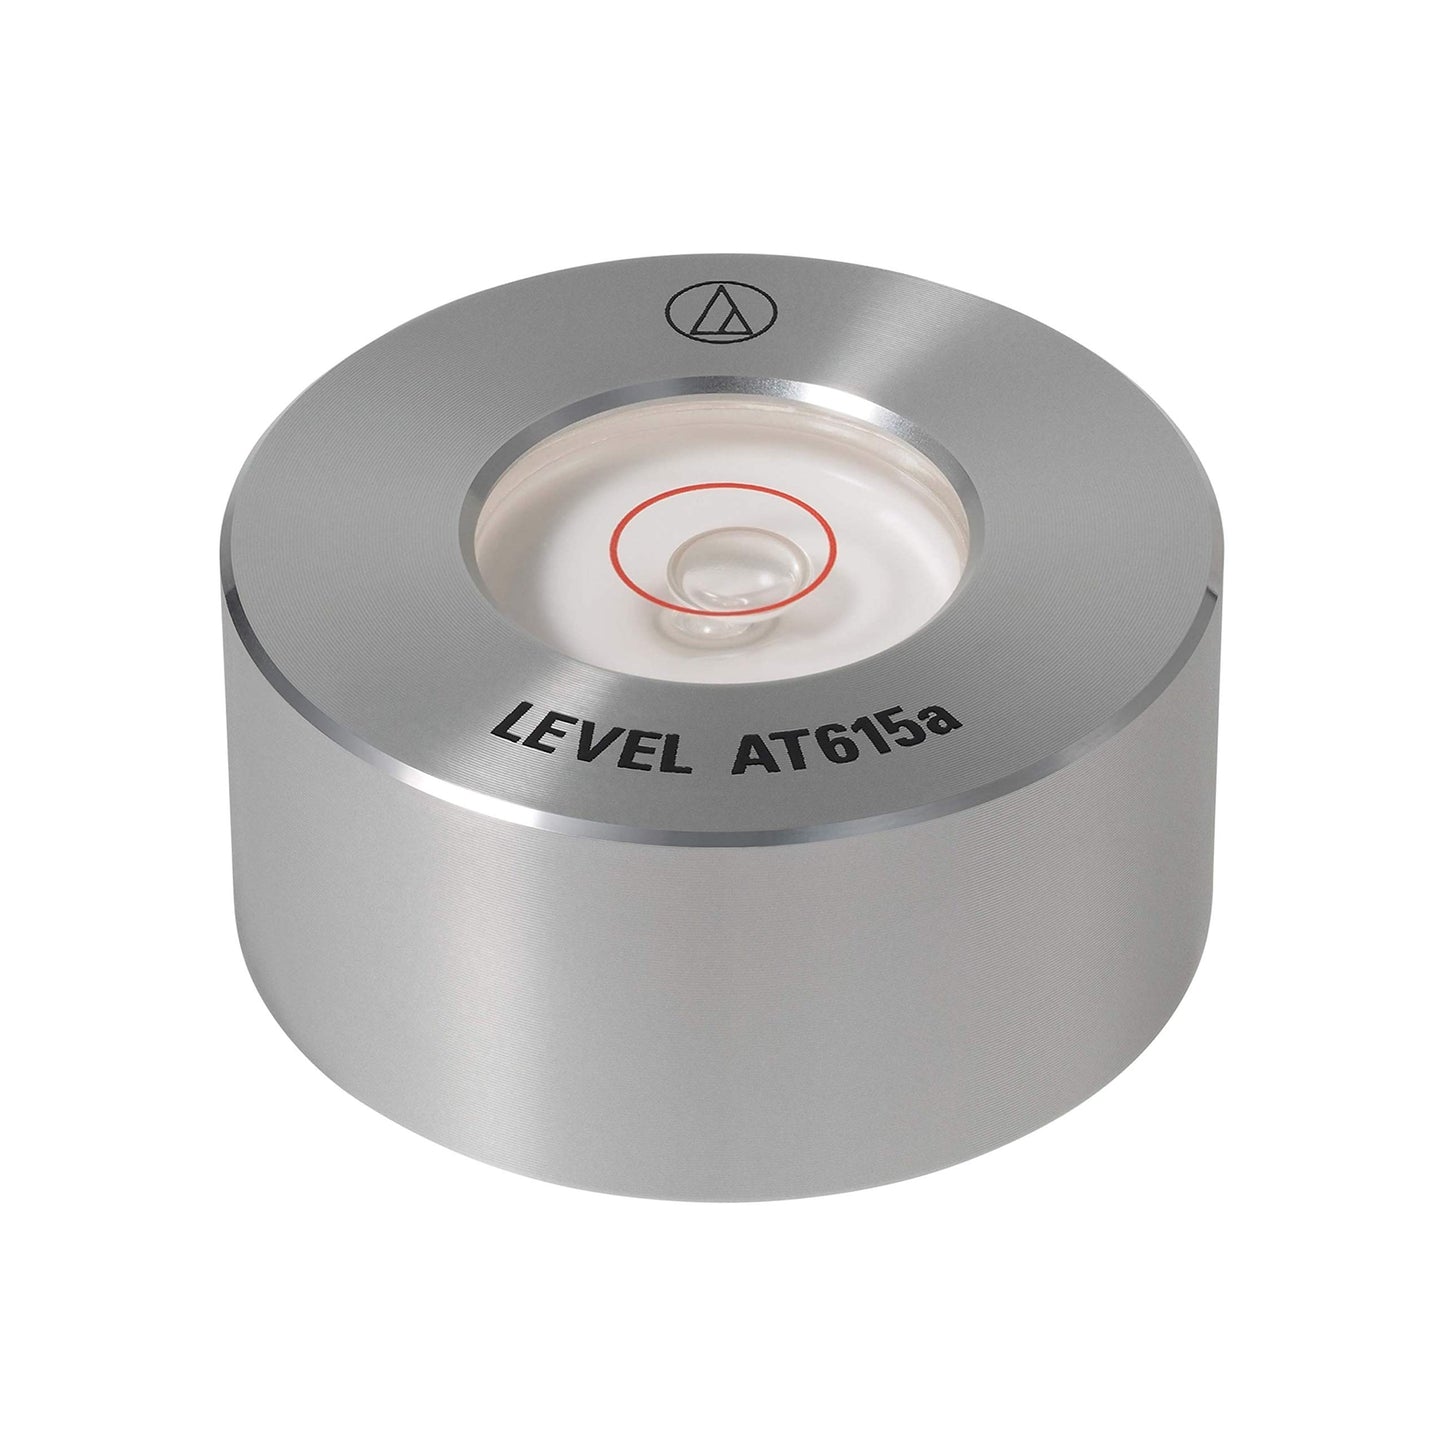 Audio-Technica AT615a High-Precision Turntable Bubble Level, Aluminum